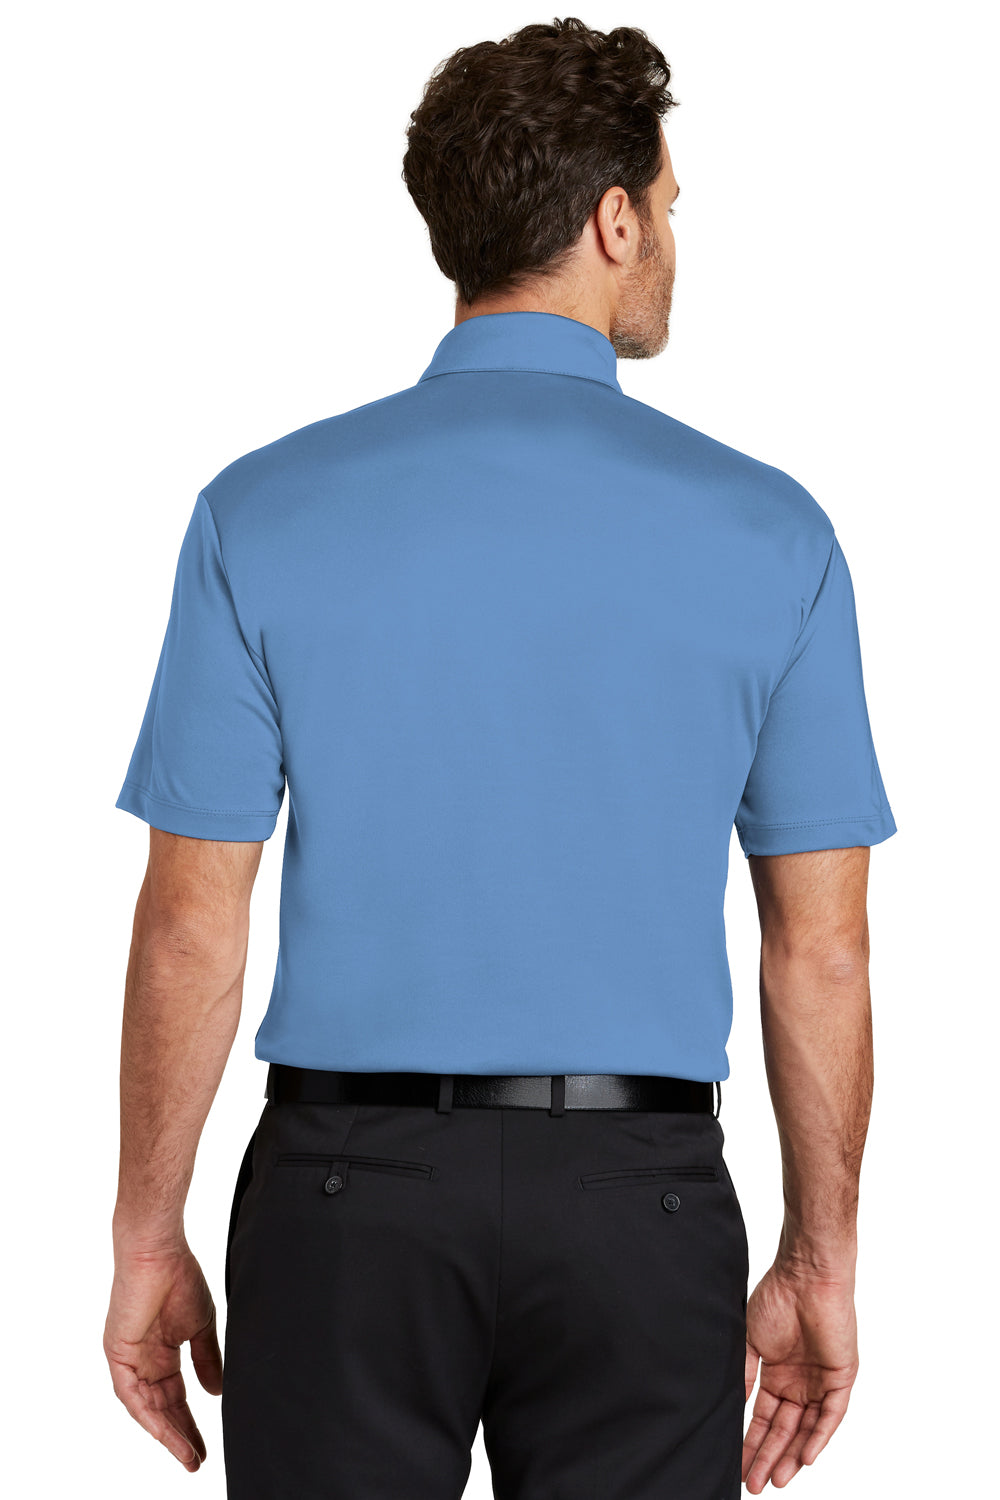 Port Authority K540 Mens Silk Touch Performance Moisture Wicking Short Sleeve Polo Shirt Carolina Blue Back